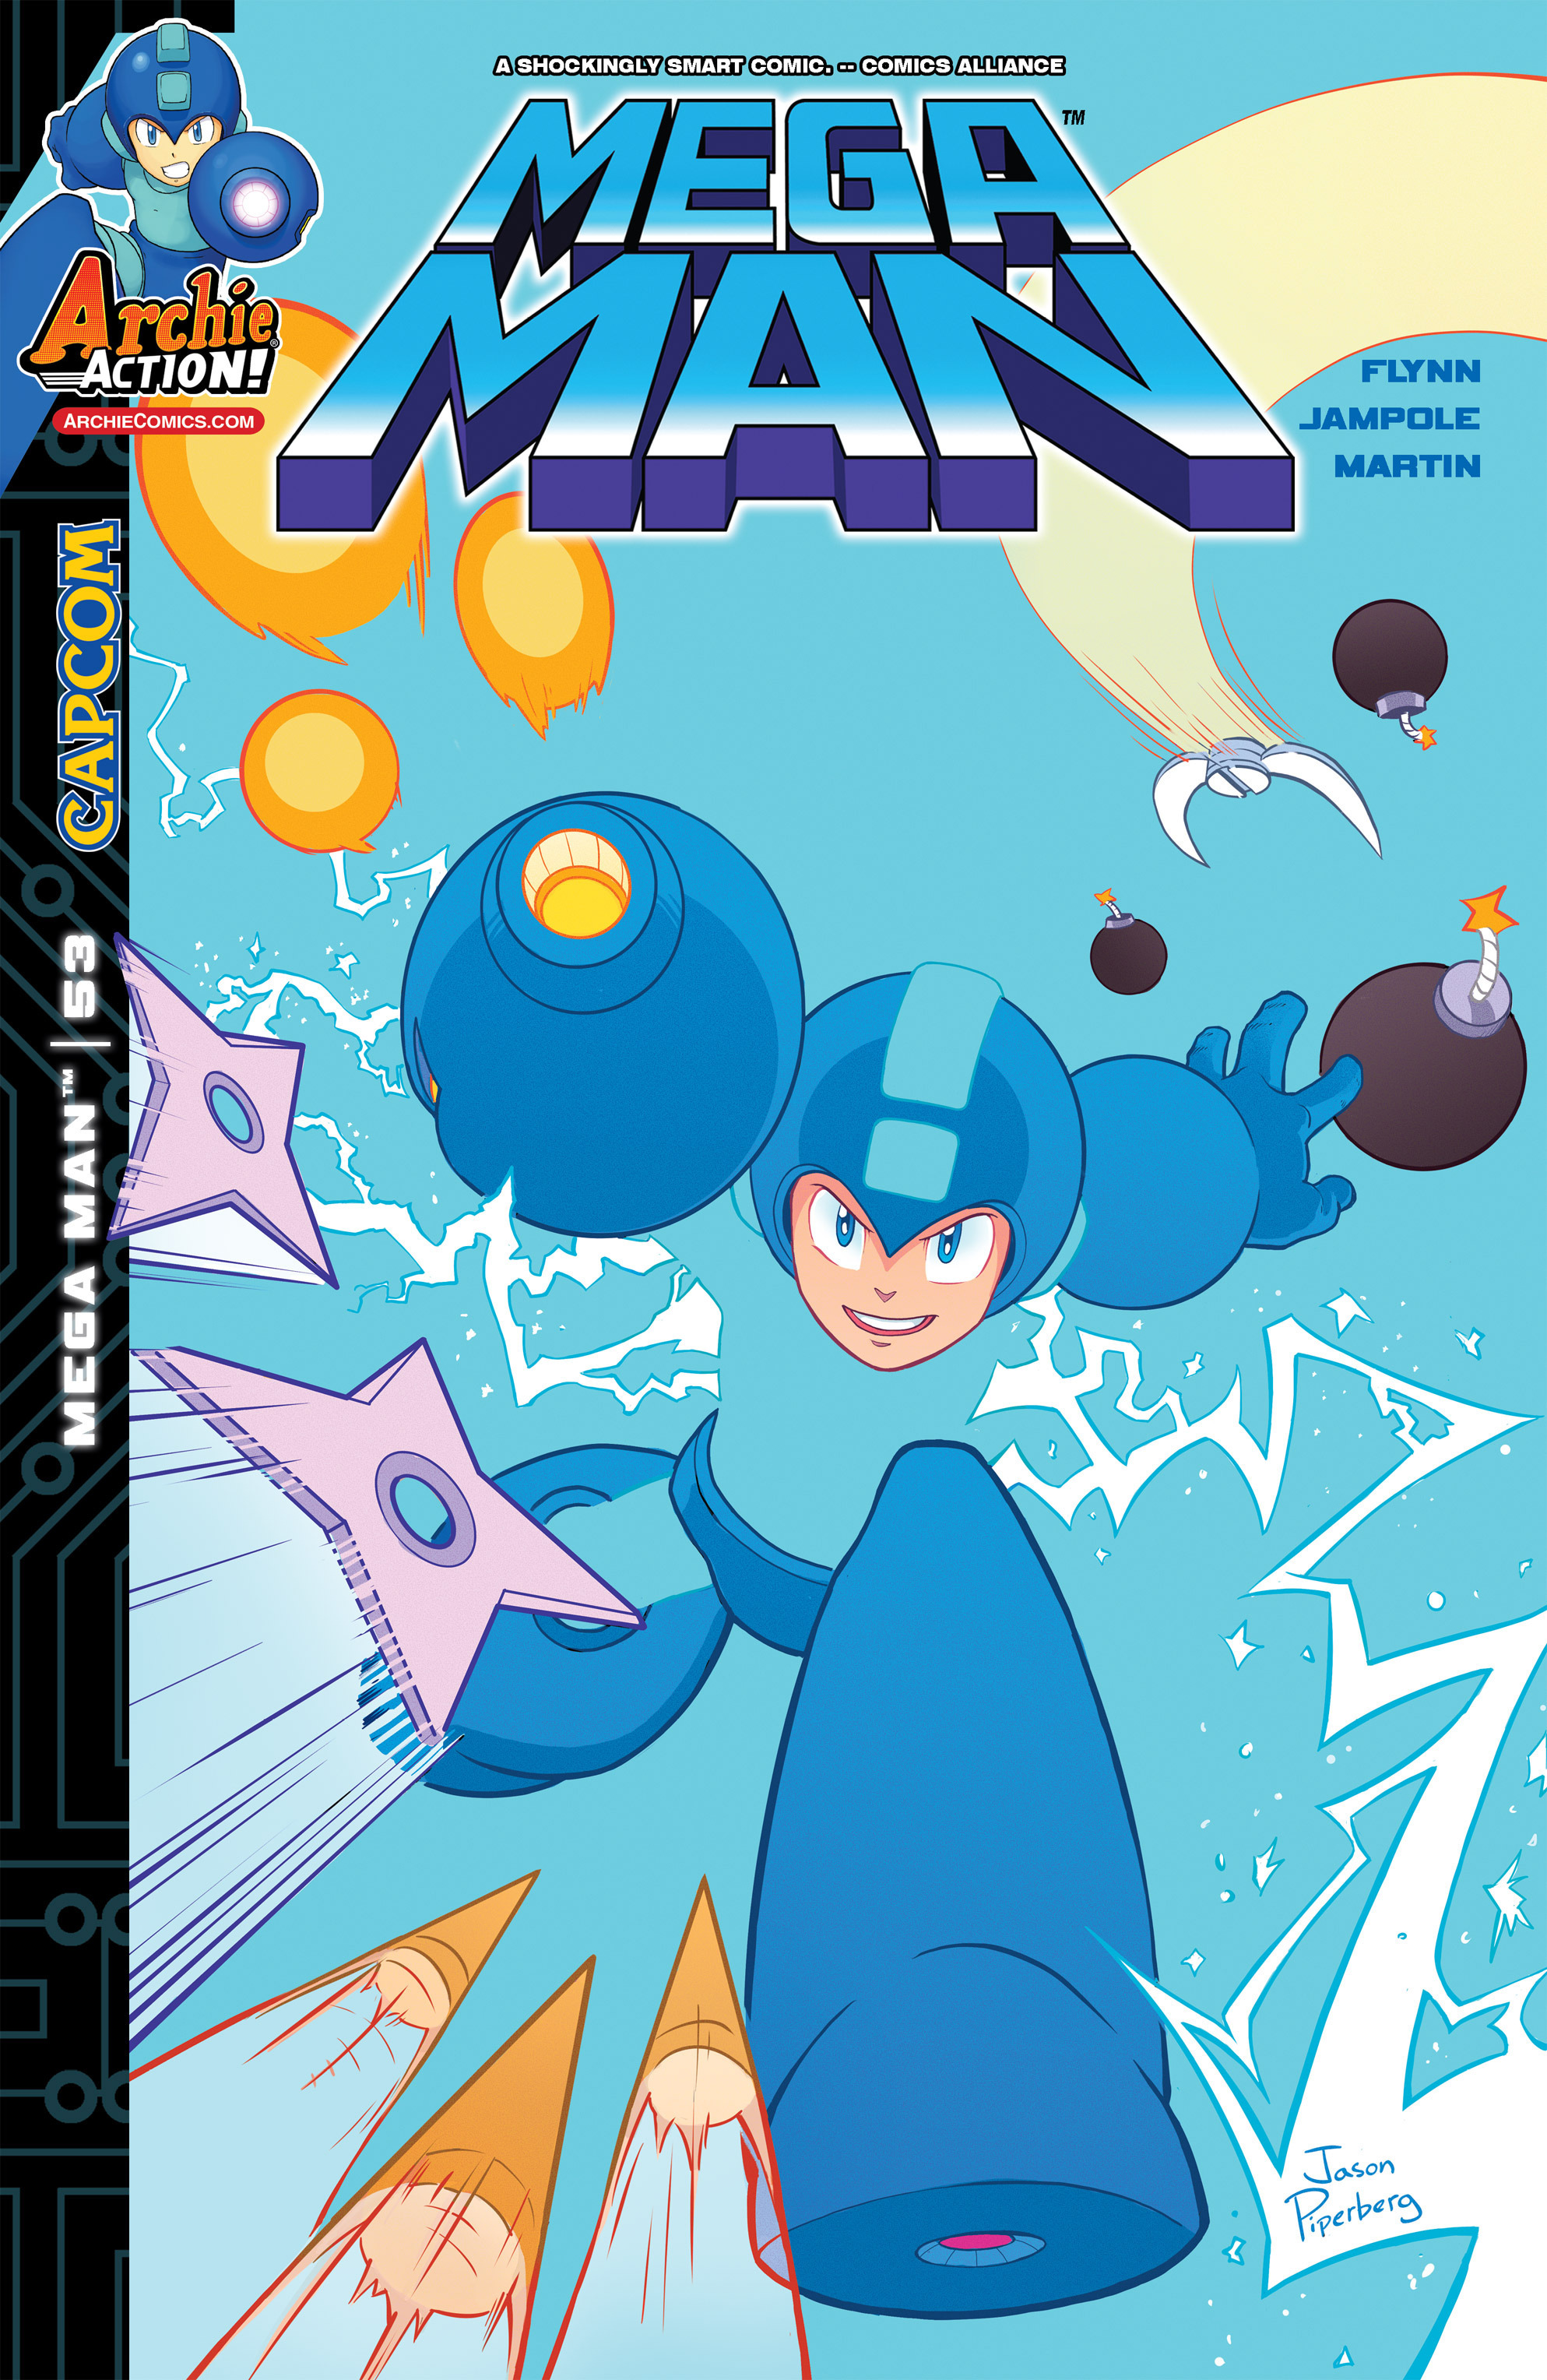 Mega Man Issue 53 Archie Comics Mmkb Fandom Powered By Wikia